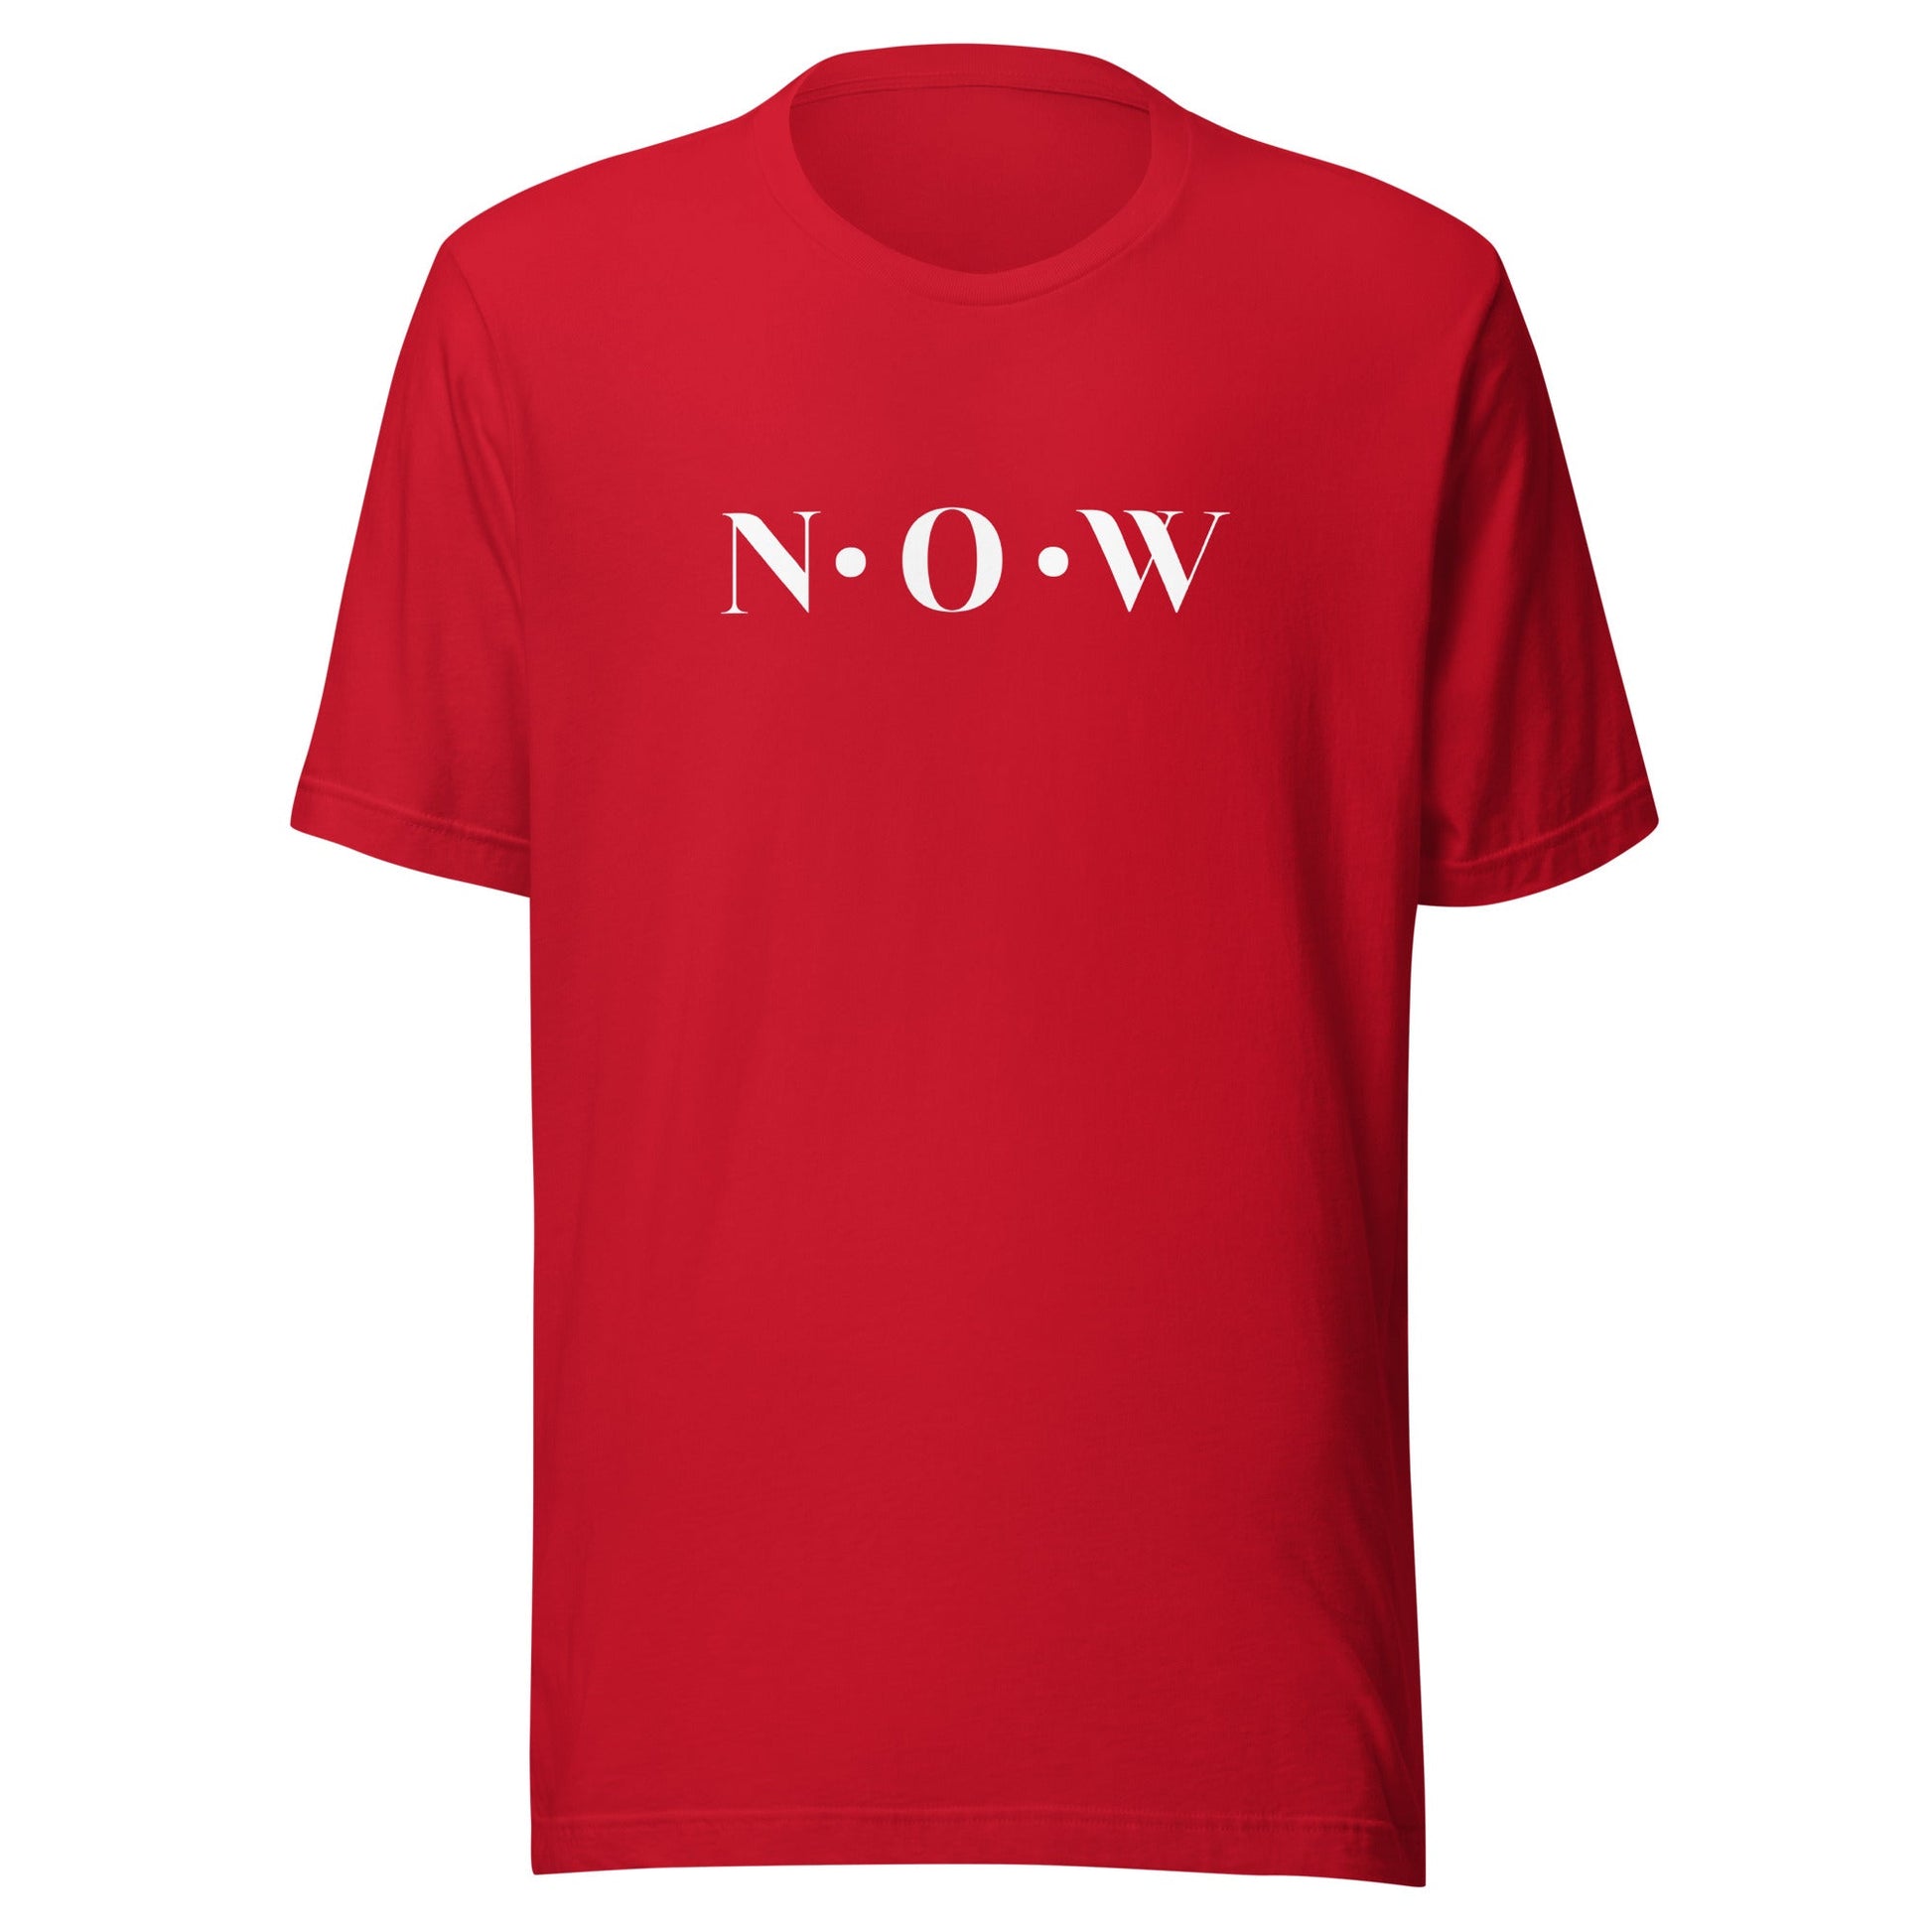 NOW - Unisex t-shirt - lilaloop - T-shirt